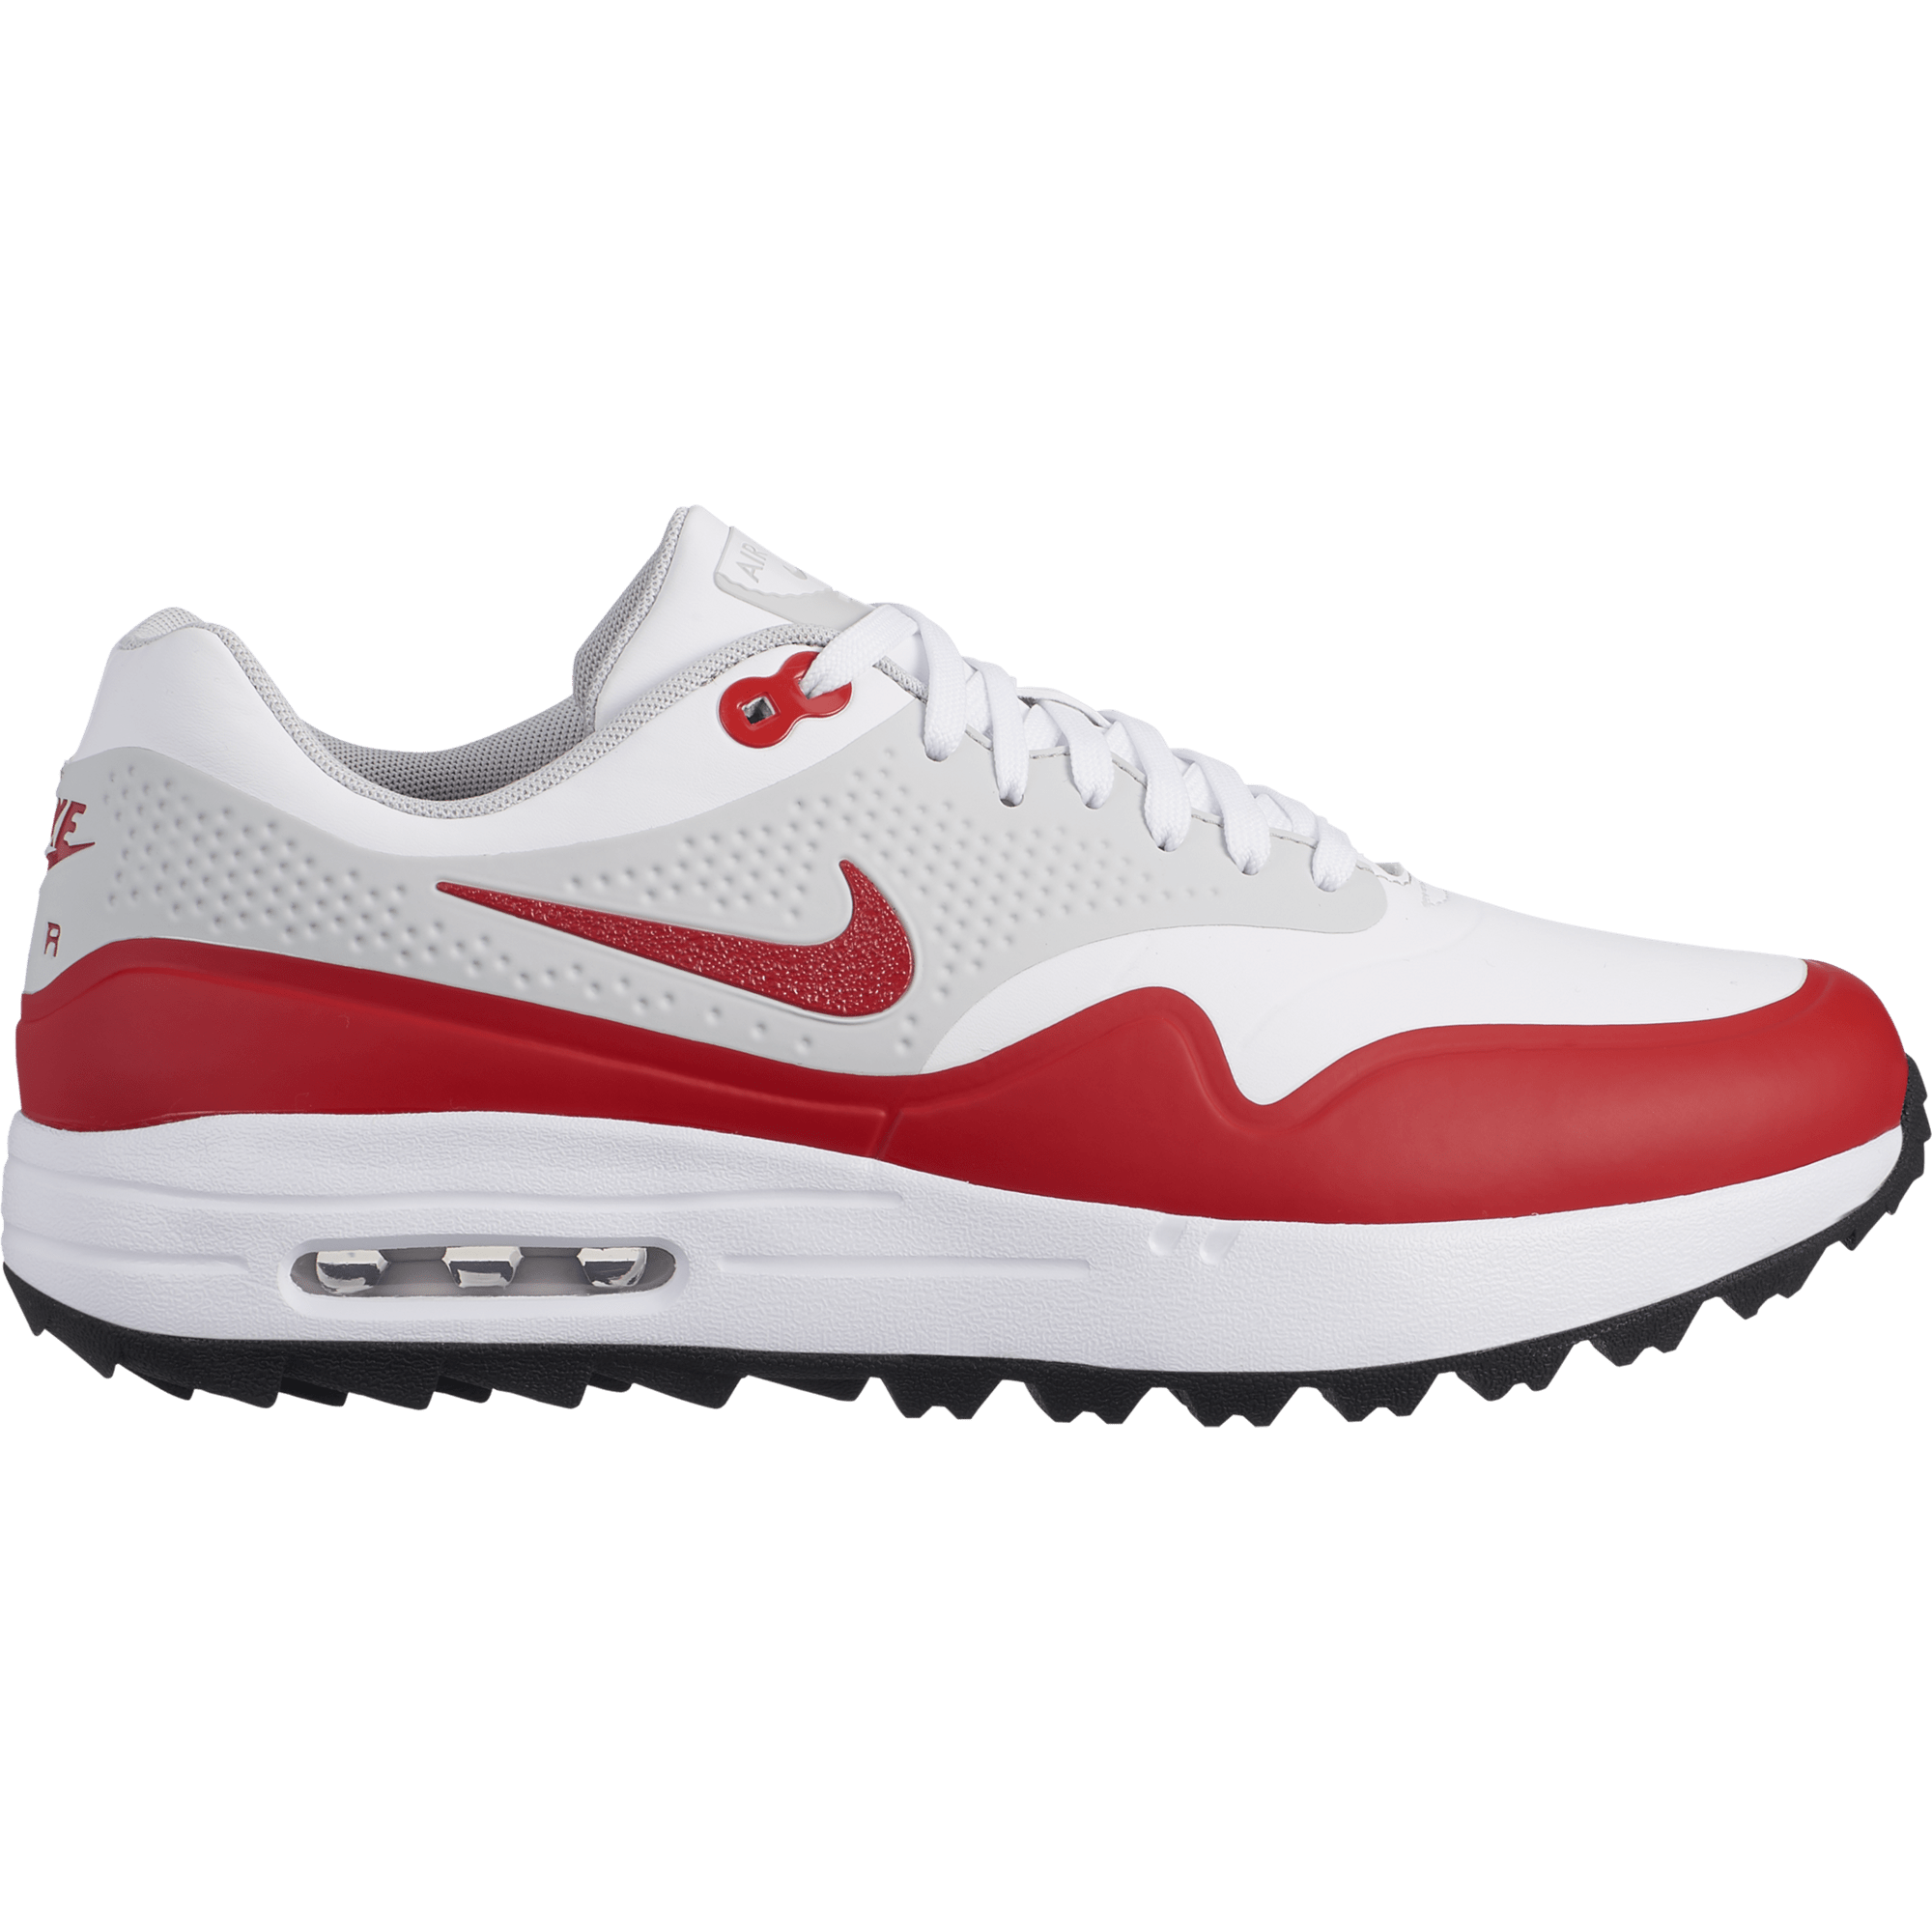 Nike Air Max 1 G Men's Golf Shoe 